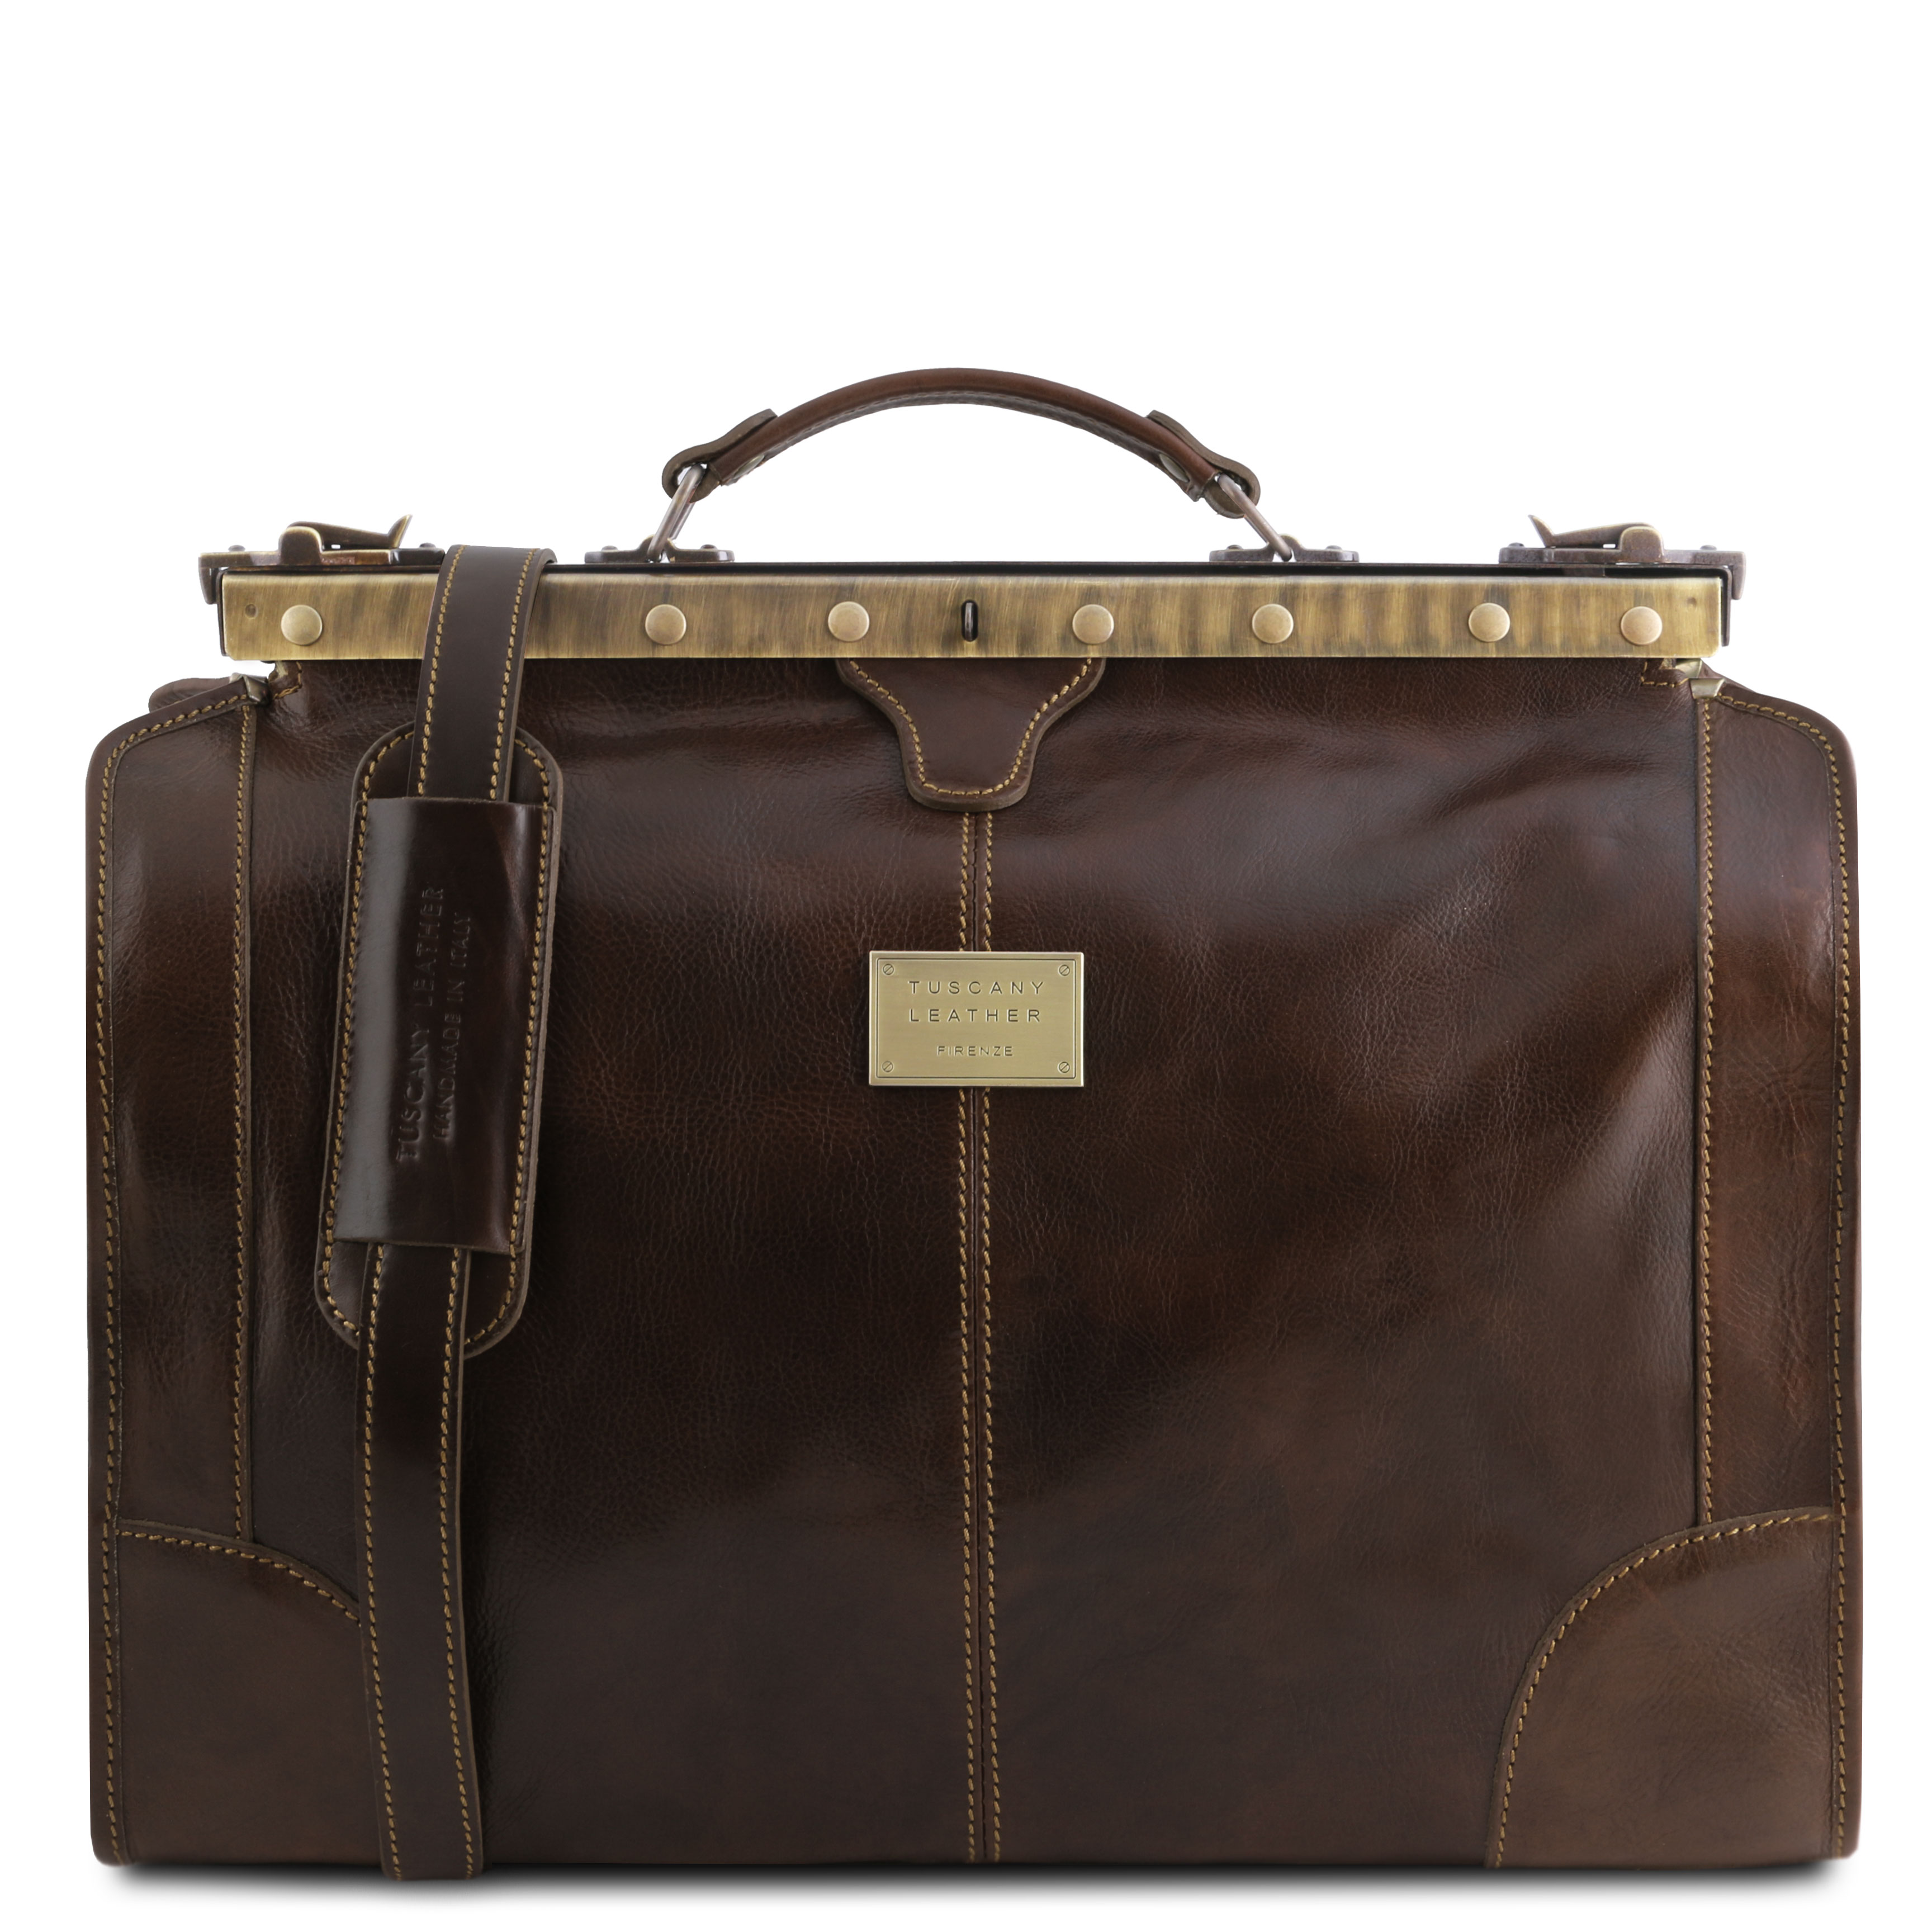 Madrid Gladstone Leather Bag - Small size Dark Brown